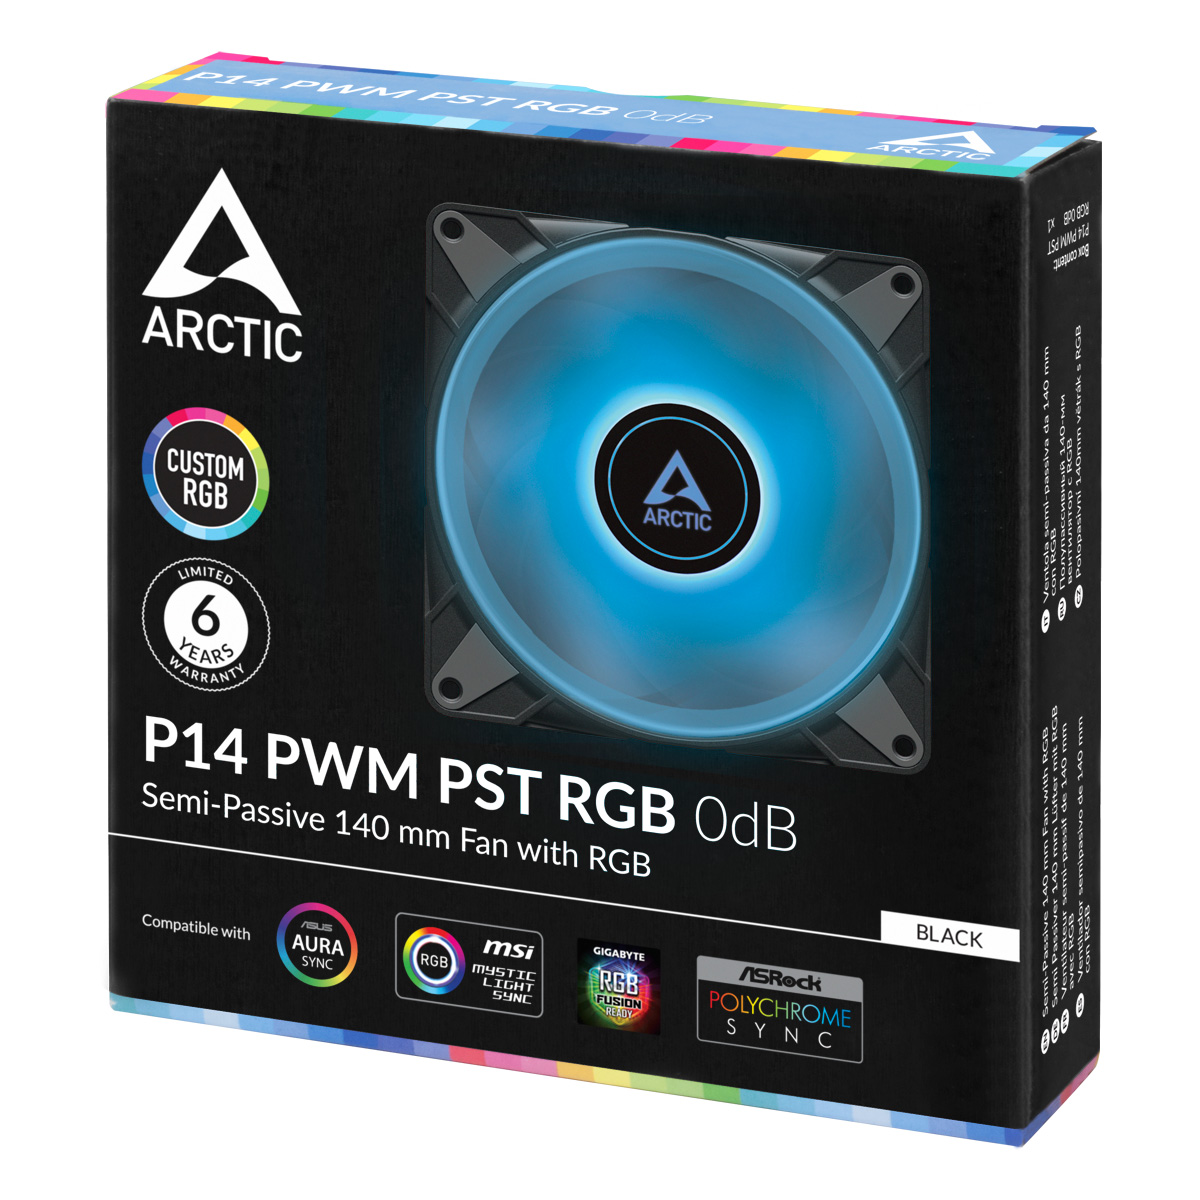 P14 PWM PST RGB